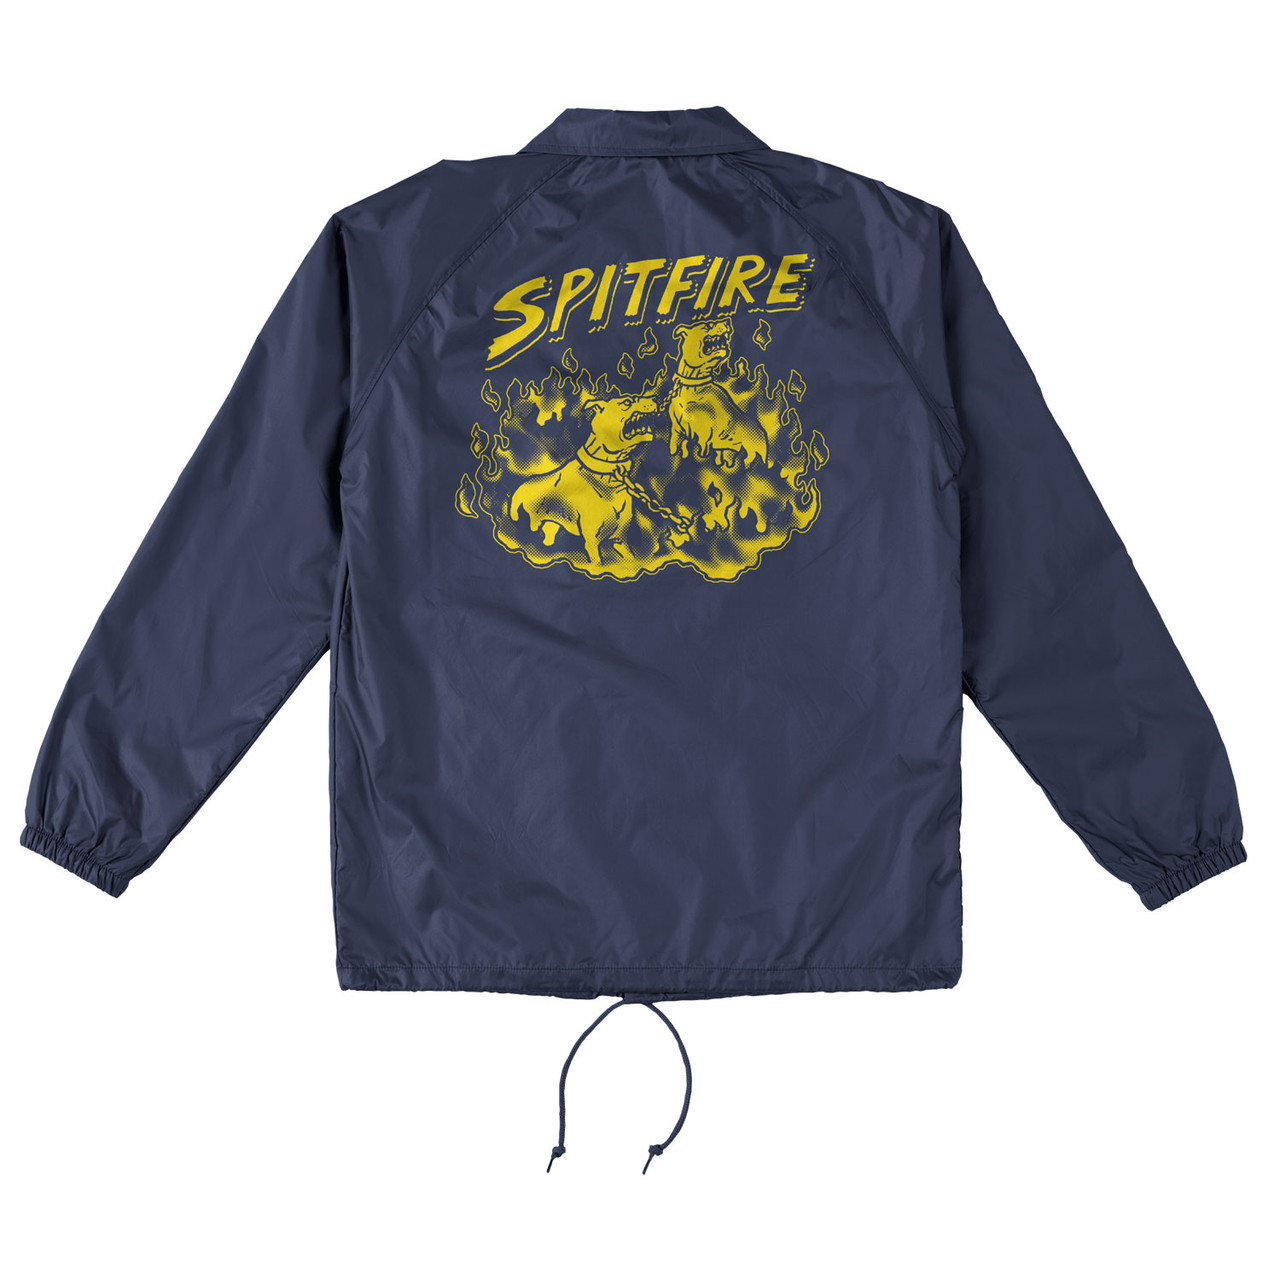 SPITFIRE(Xsbgt@C[) / Coat Hellhounds U Jacket